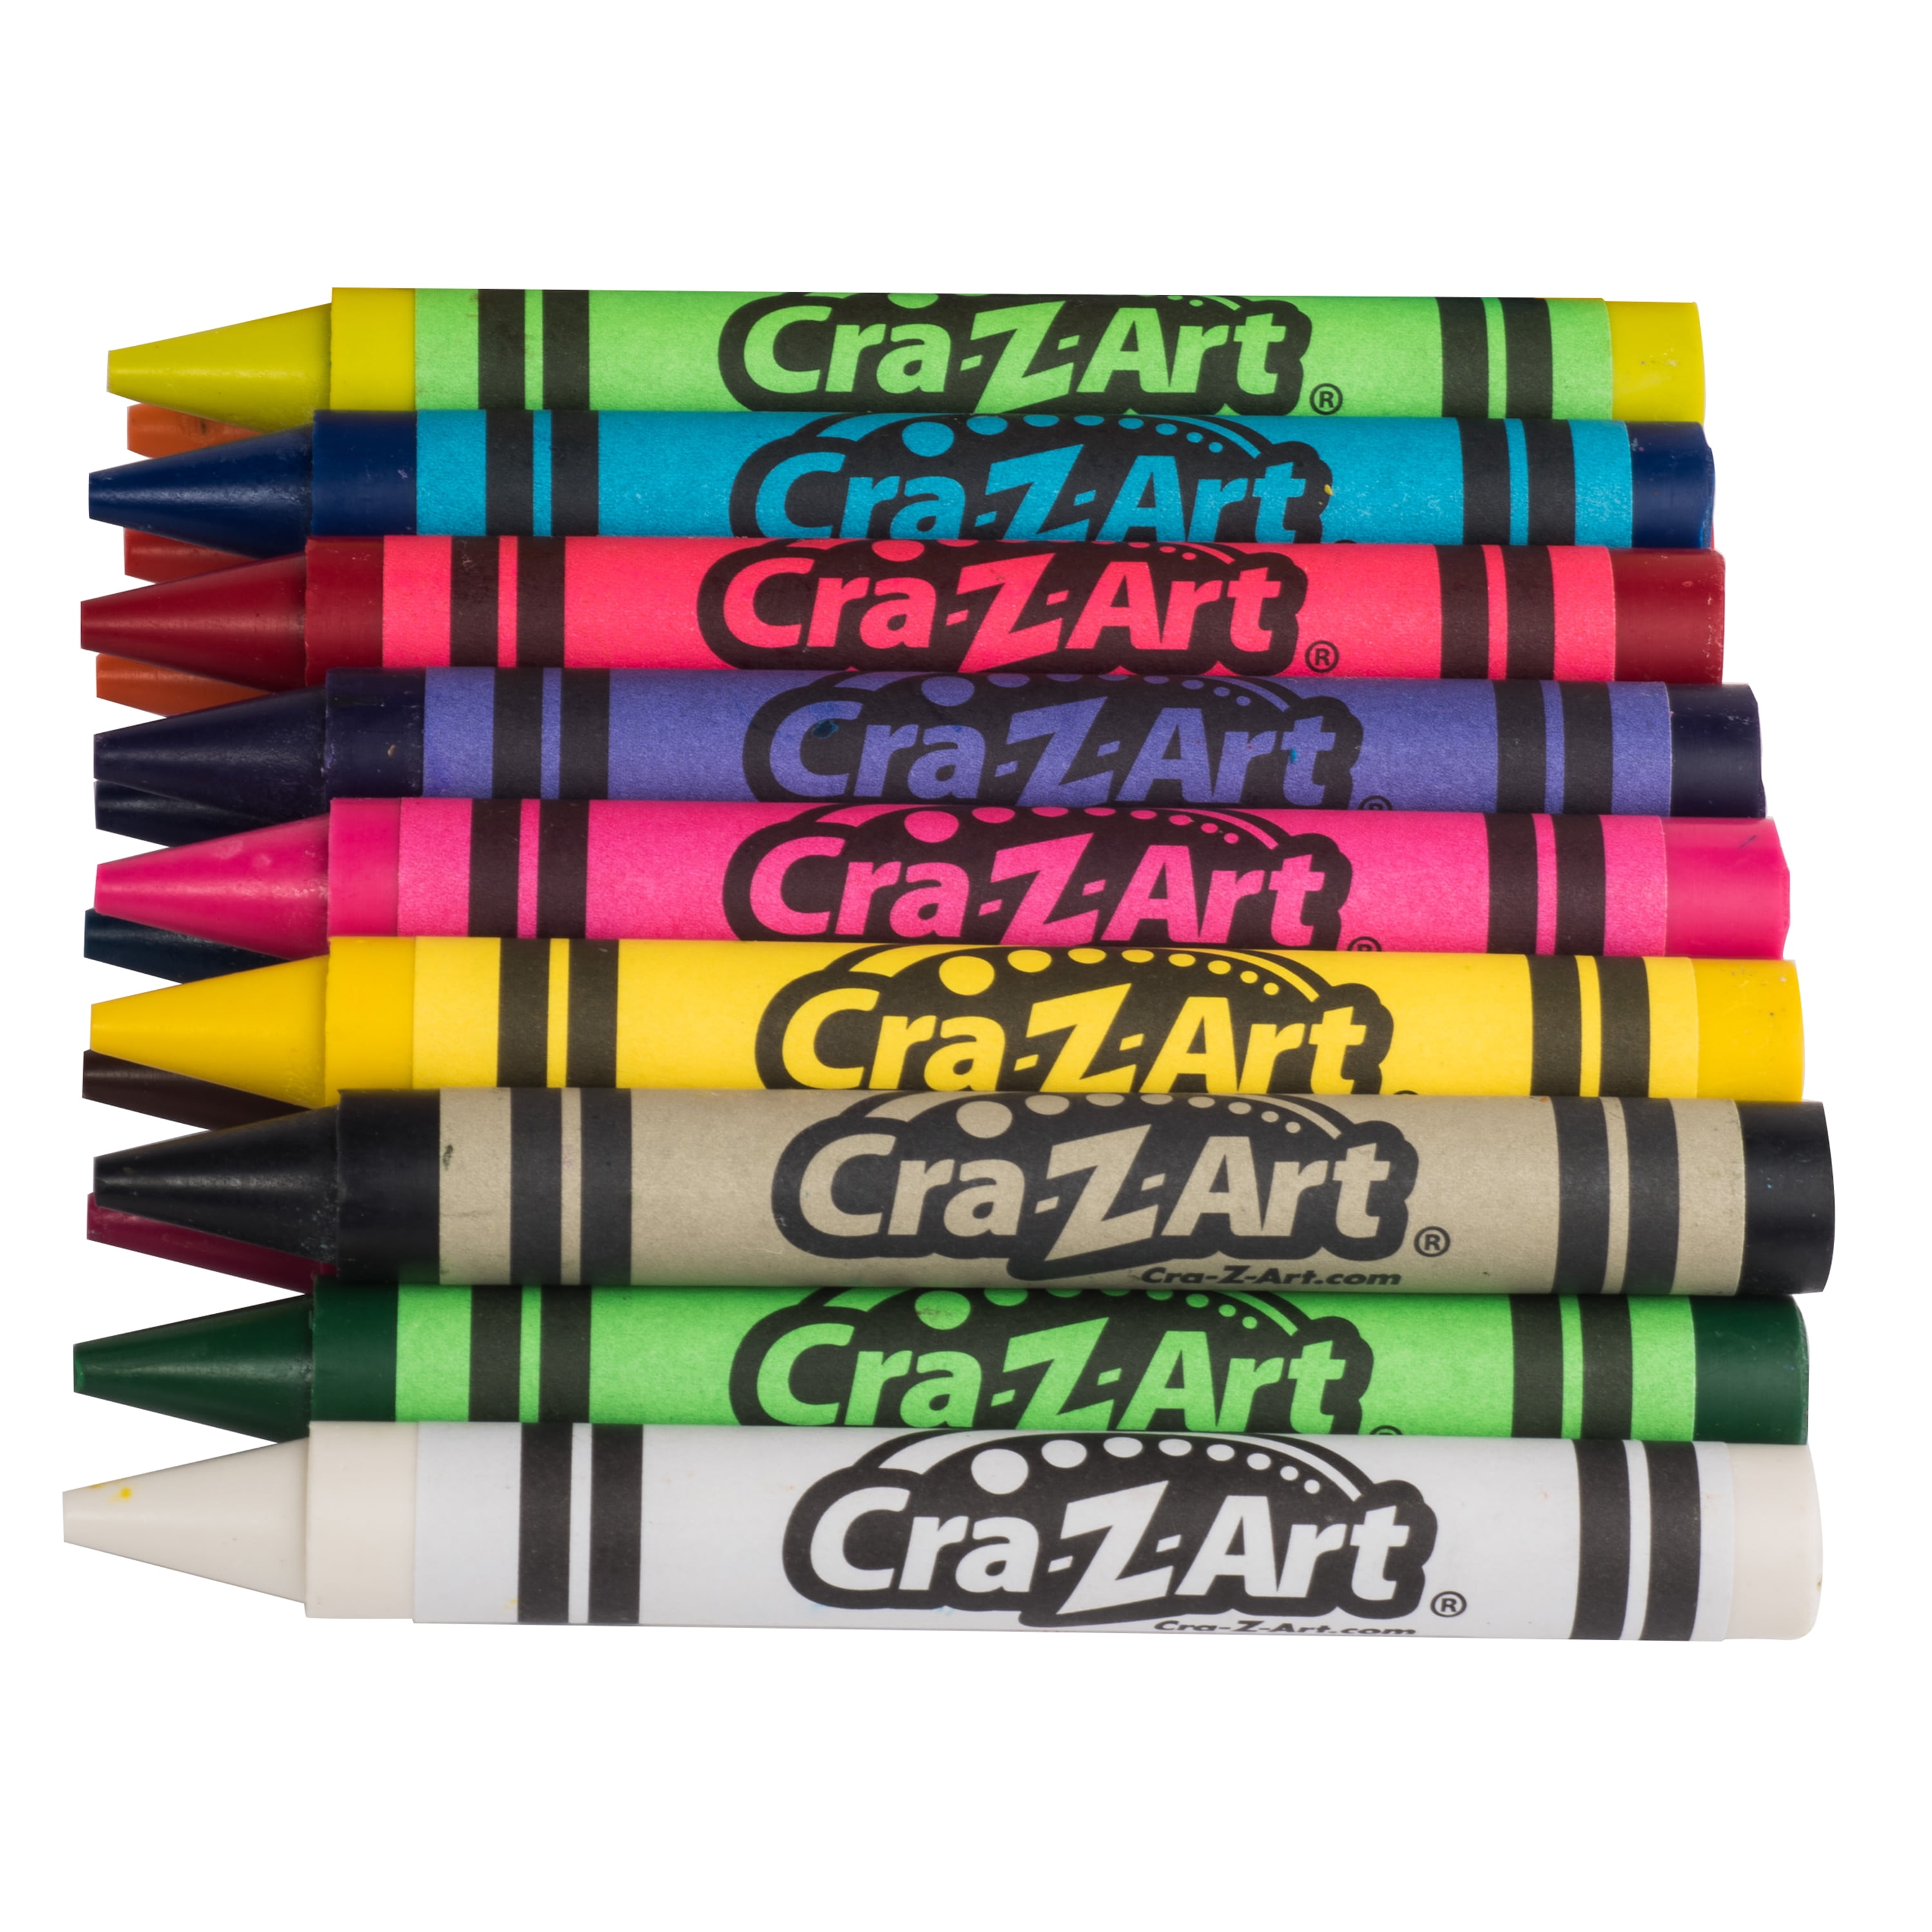 Cra-Z-Art Jumbo Crayons Assorted Colors 8 Count